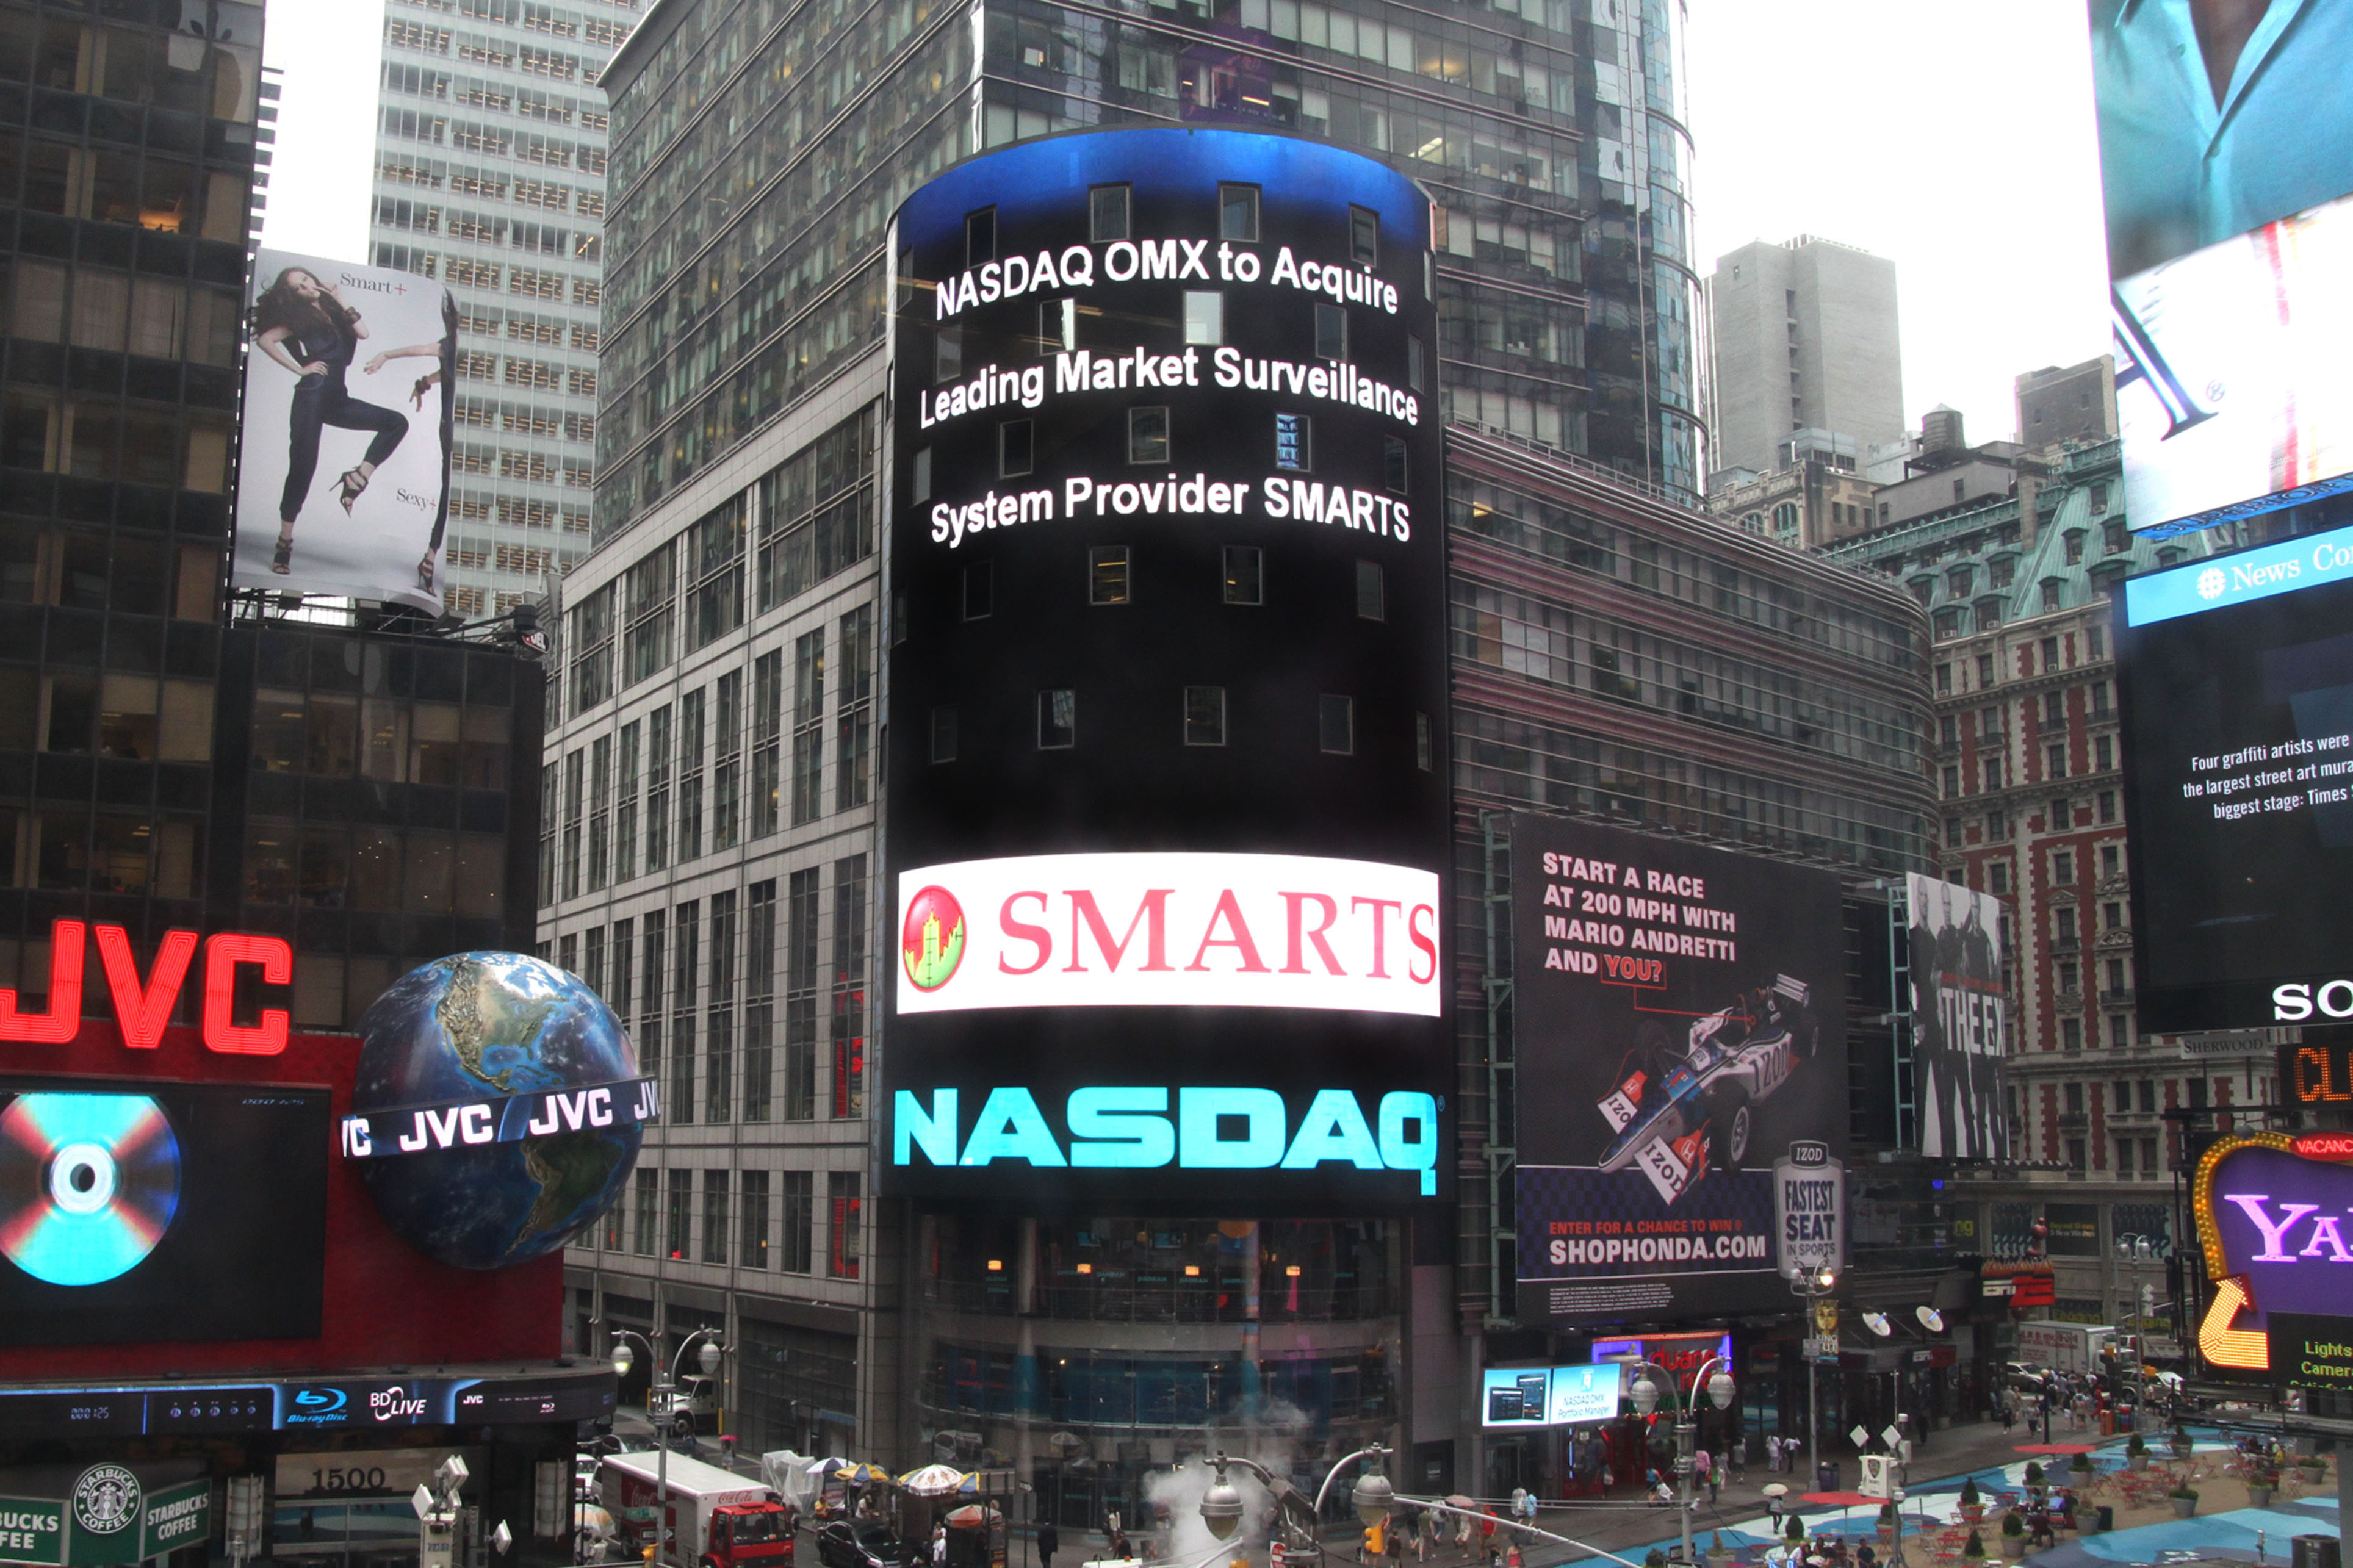 NASDAQ OMX to Acquire SMARTS